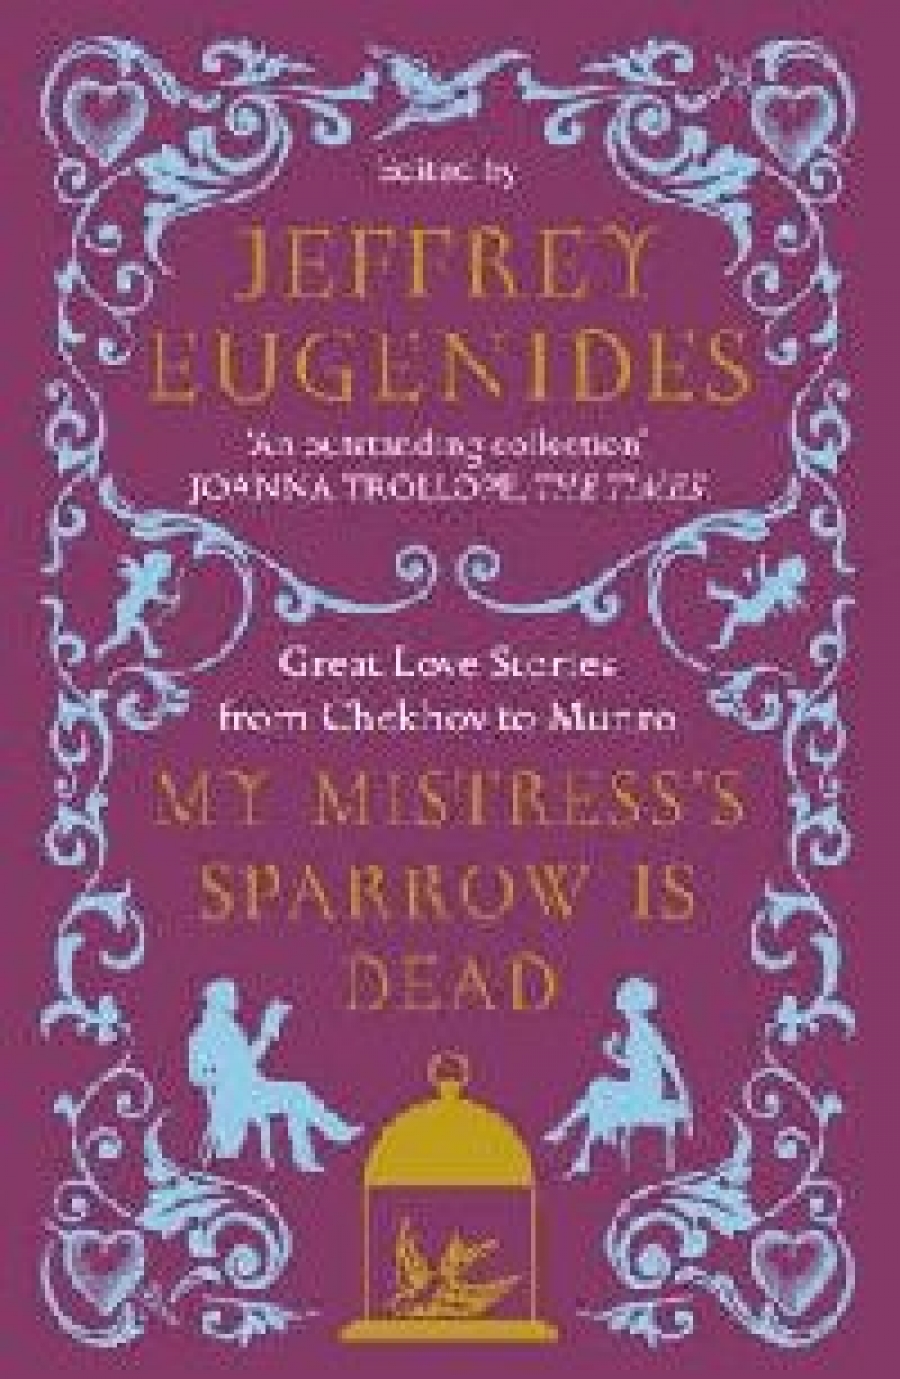 Jeffrey Eugenides My mistresses sparrow is dea (   ) 